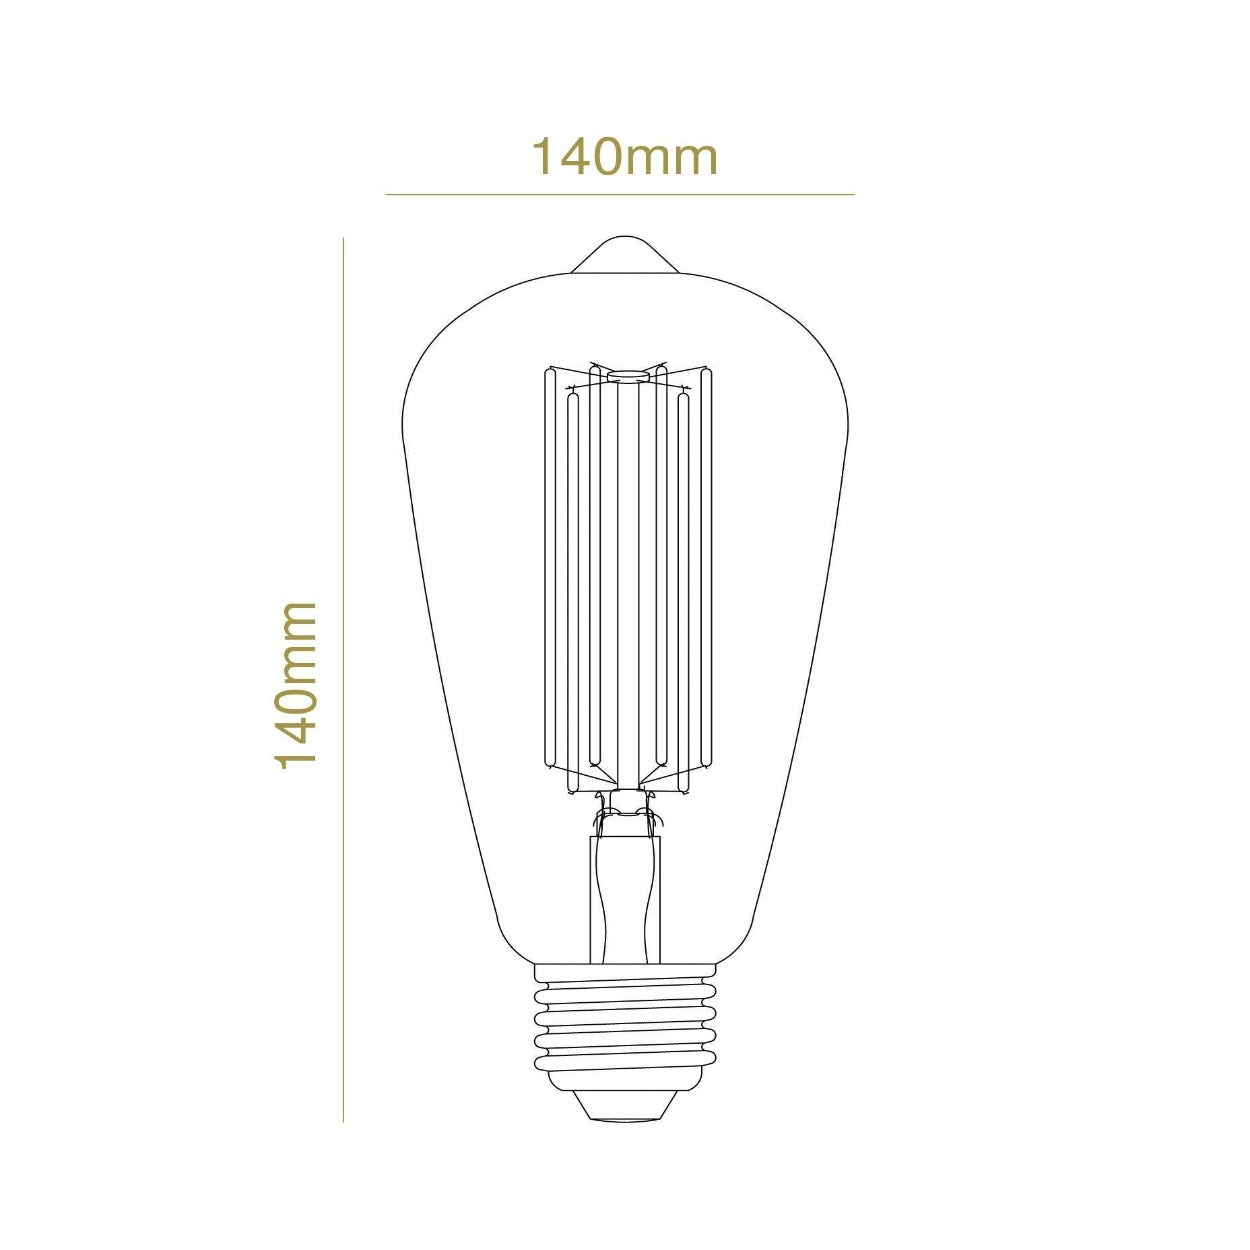 ANKUR GLO ST64 LAMP - Ankur Lighting